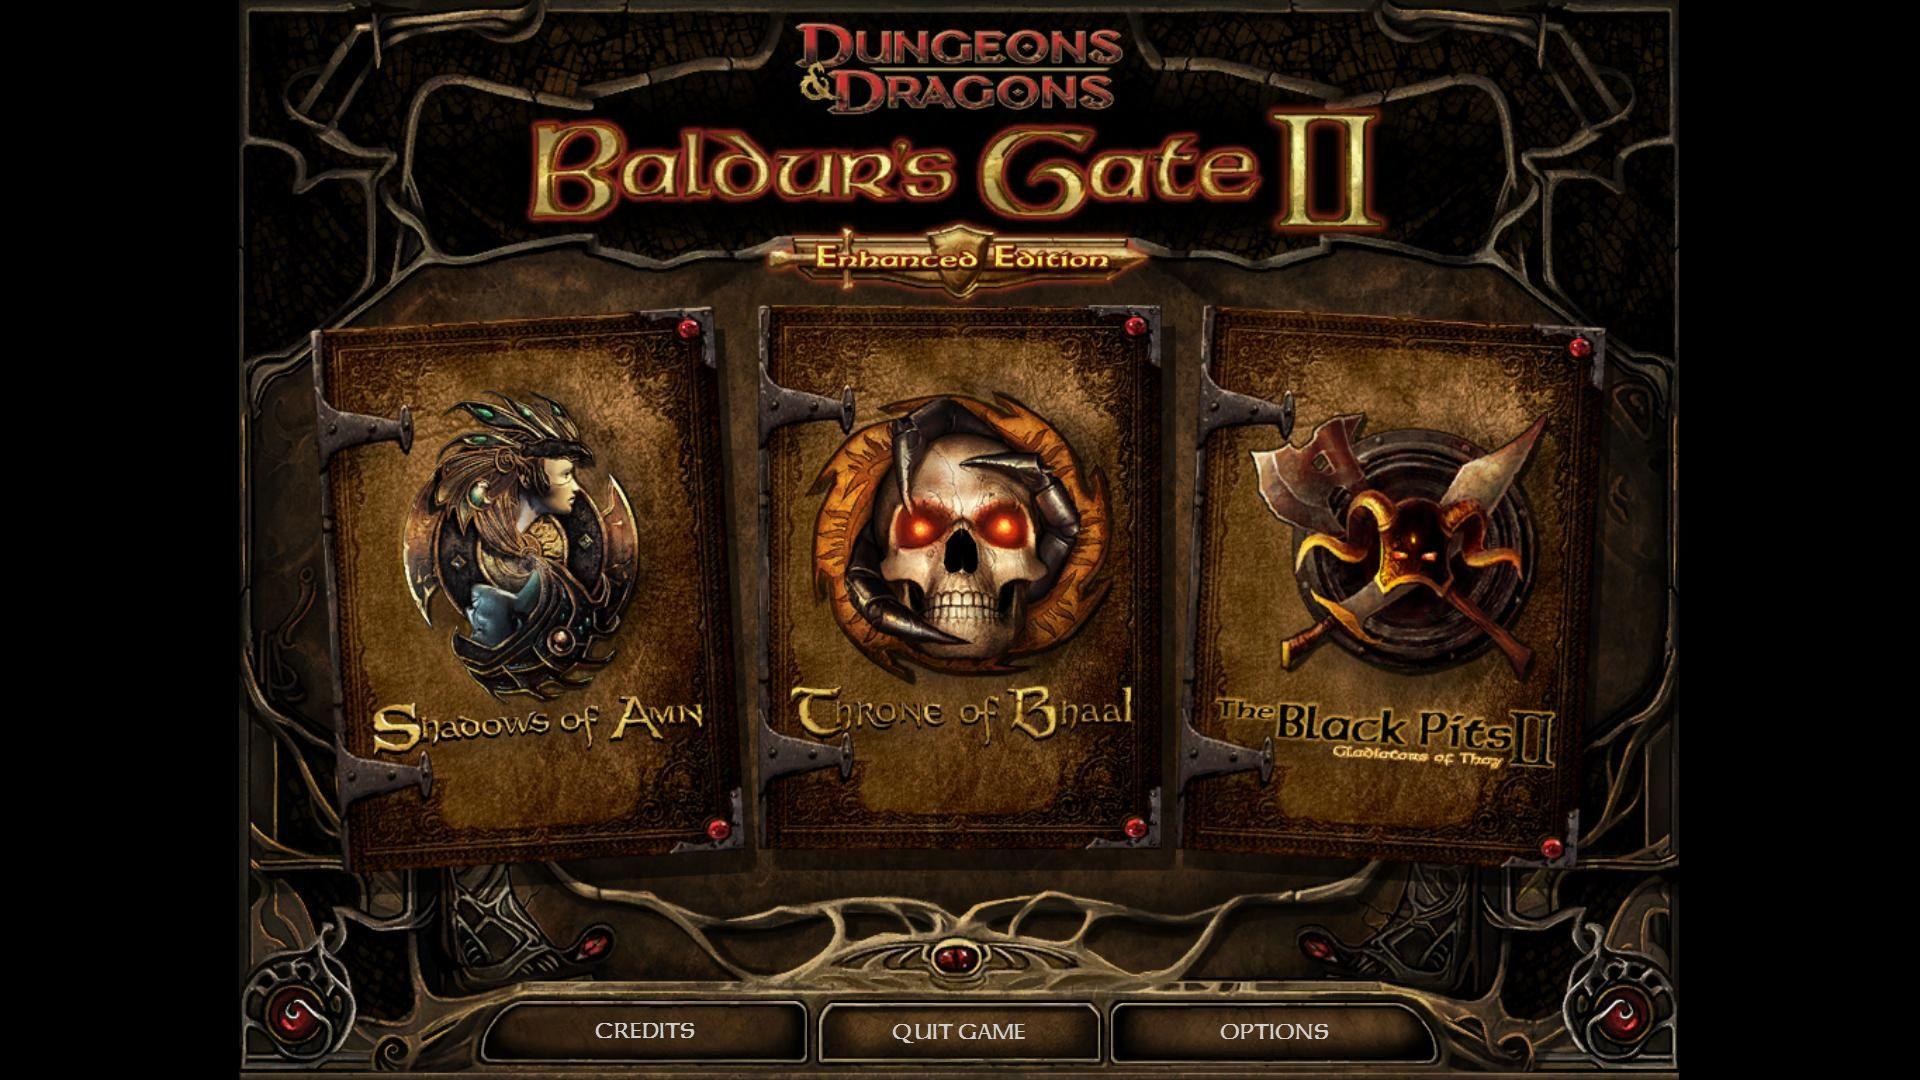 Baldur's Gate II: Enhanced Edition Screenshots for Windows